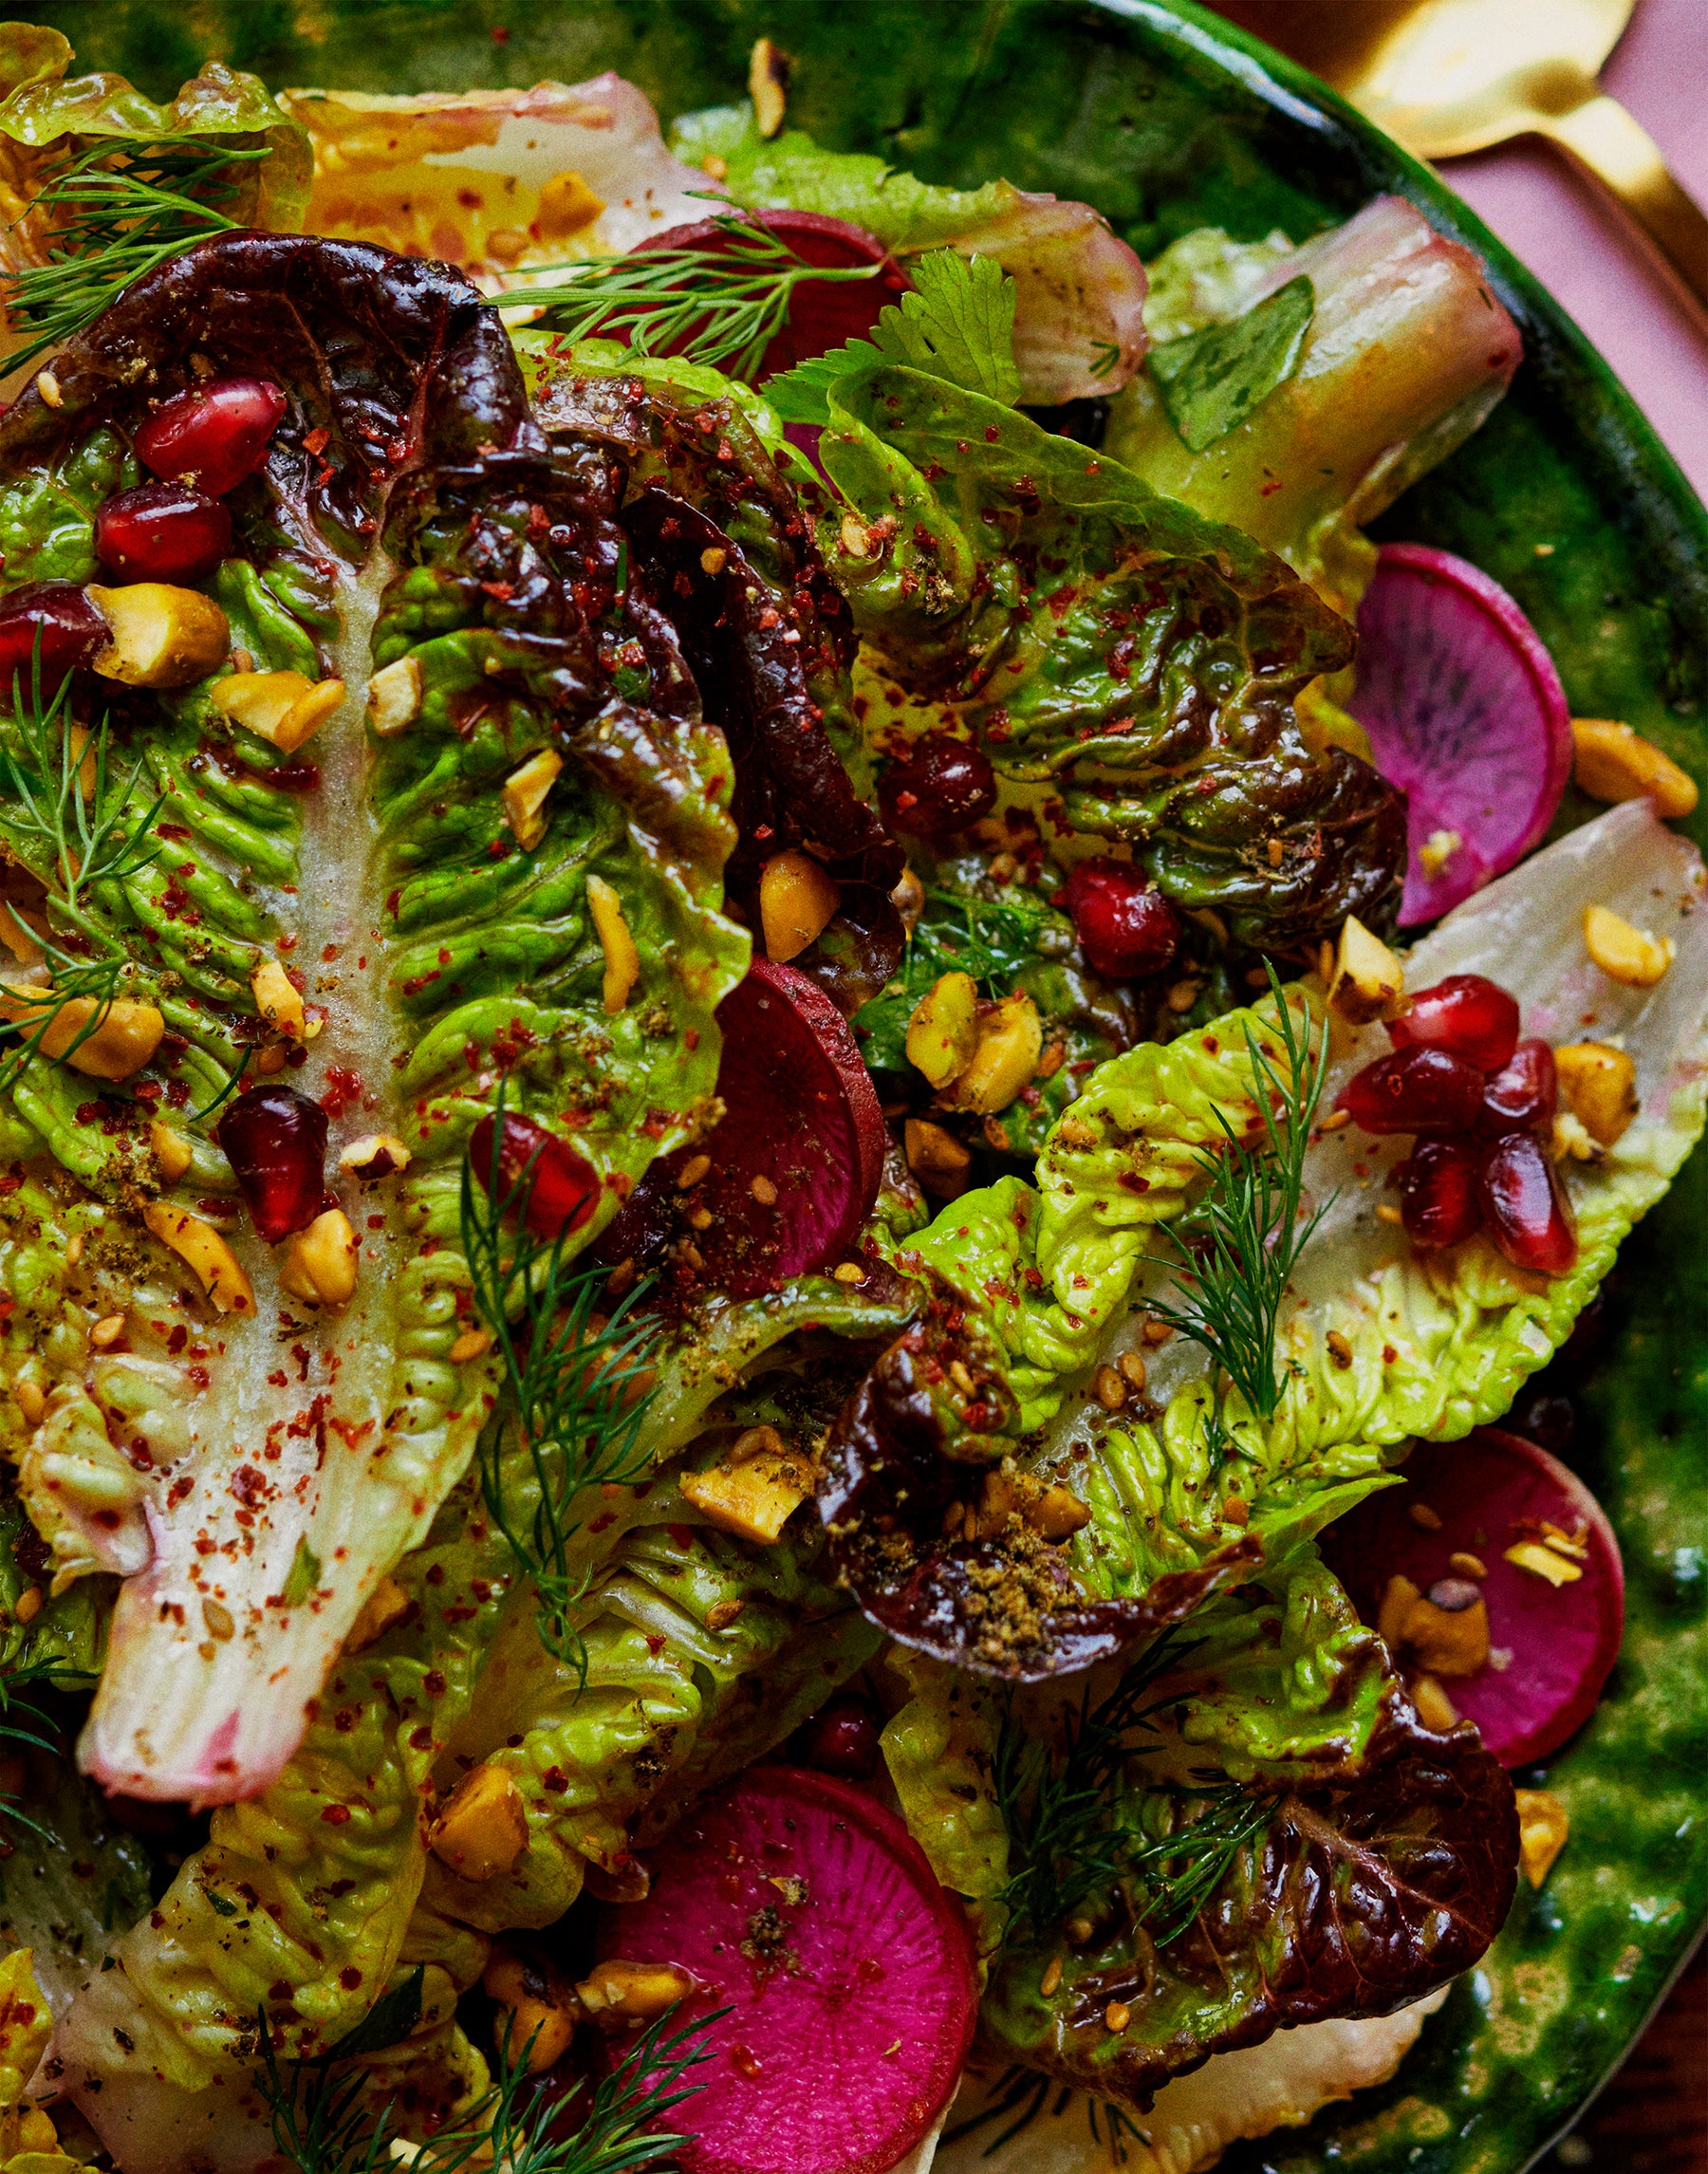 How Little Gem lettuce became the crown jewel of restaurant salads - The  Washington Post